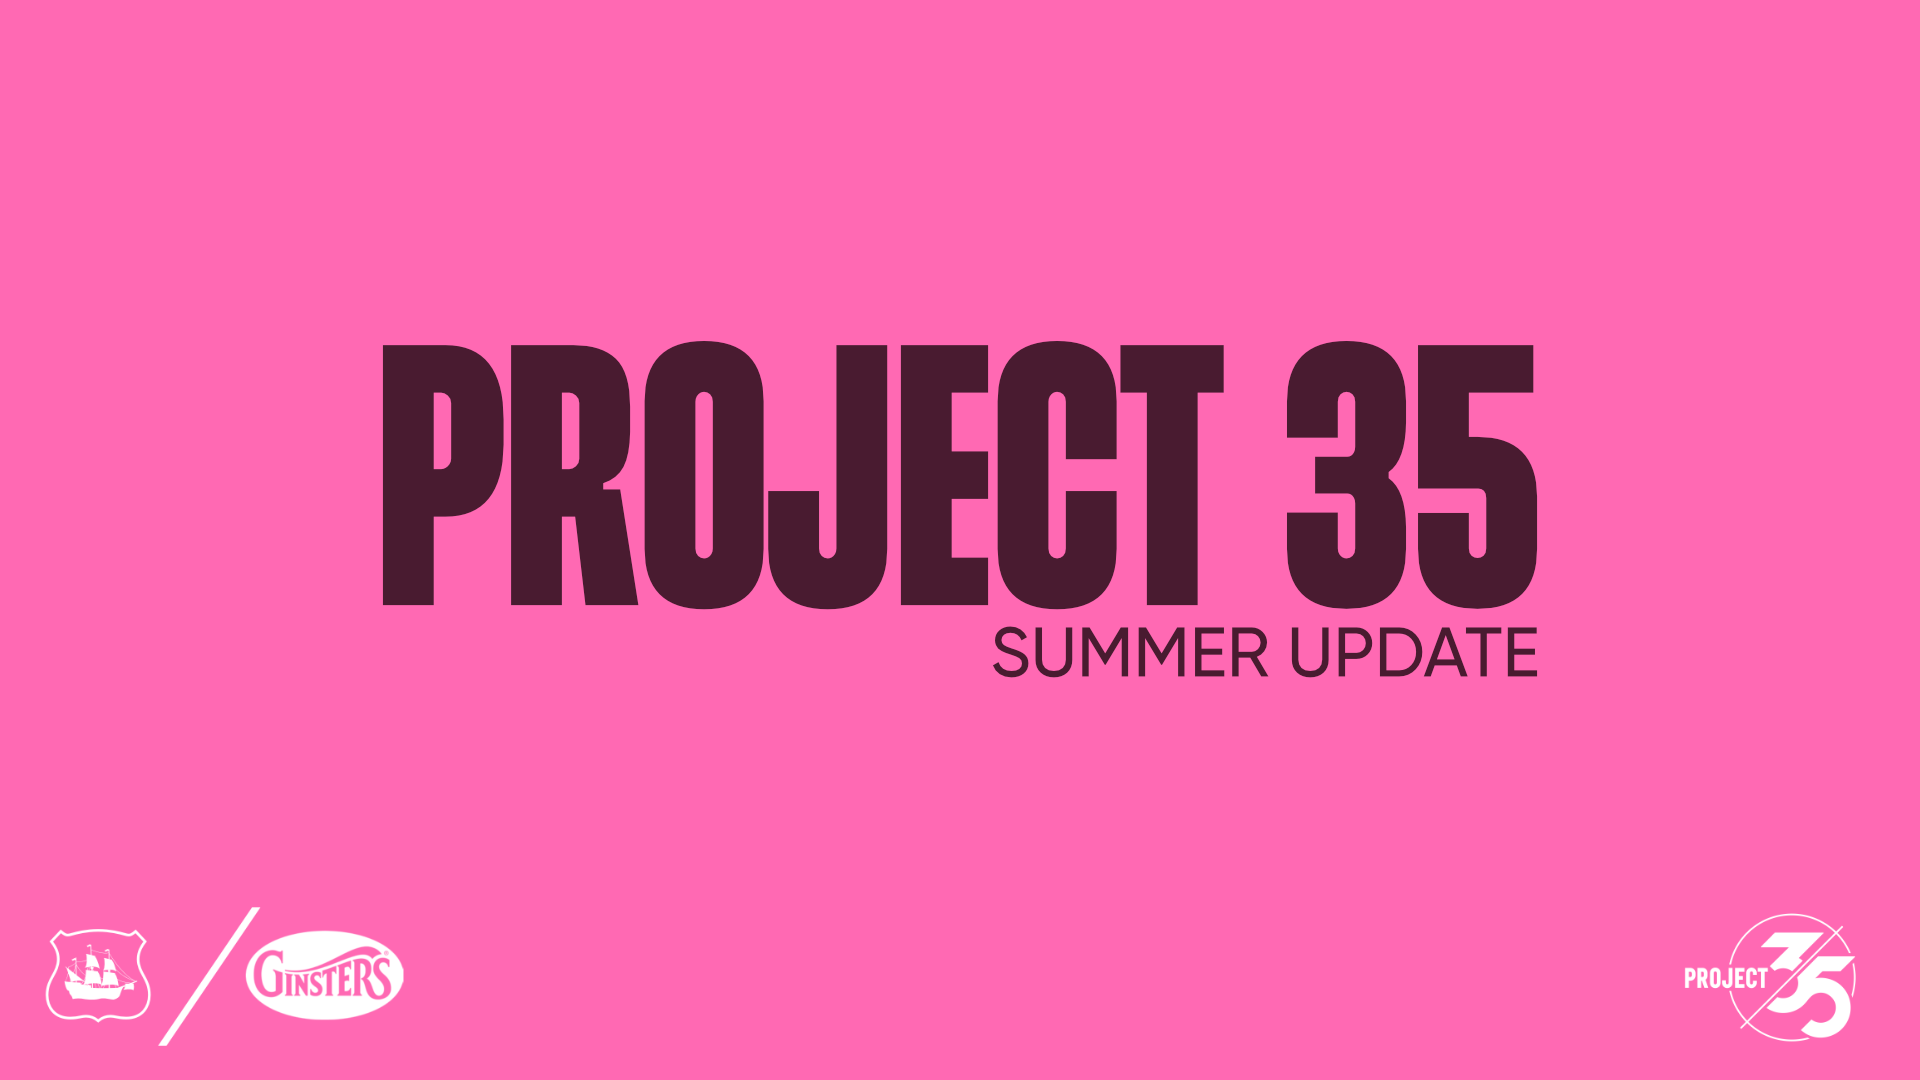 Project 35 summer update